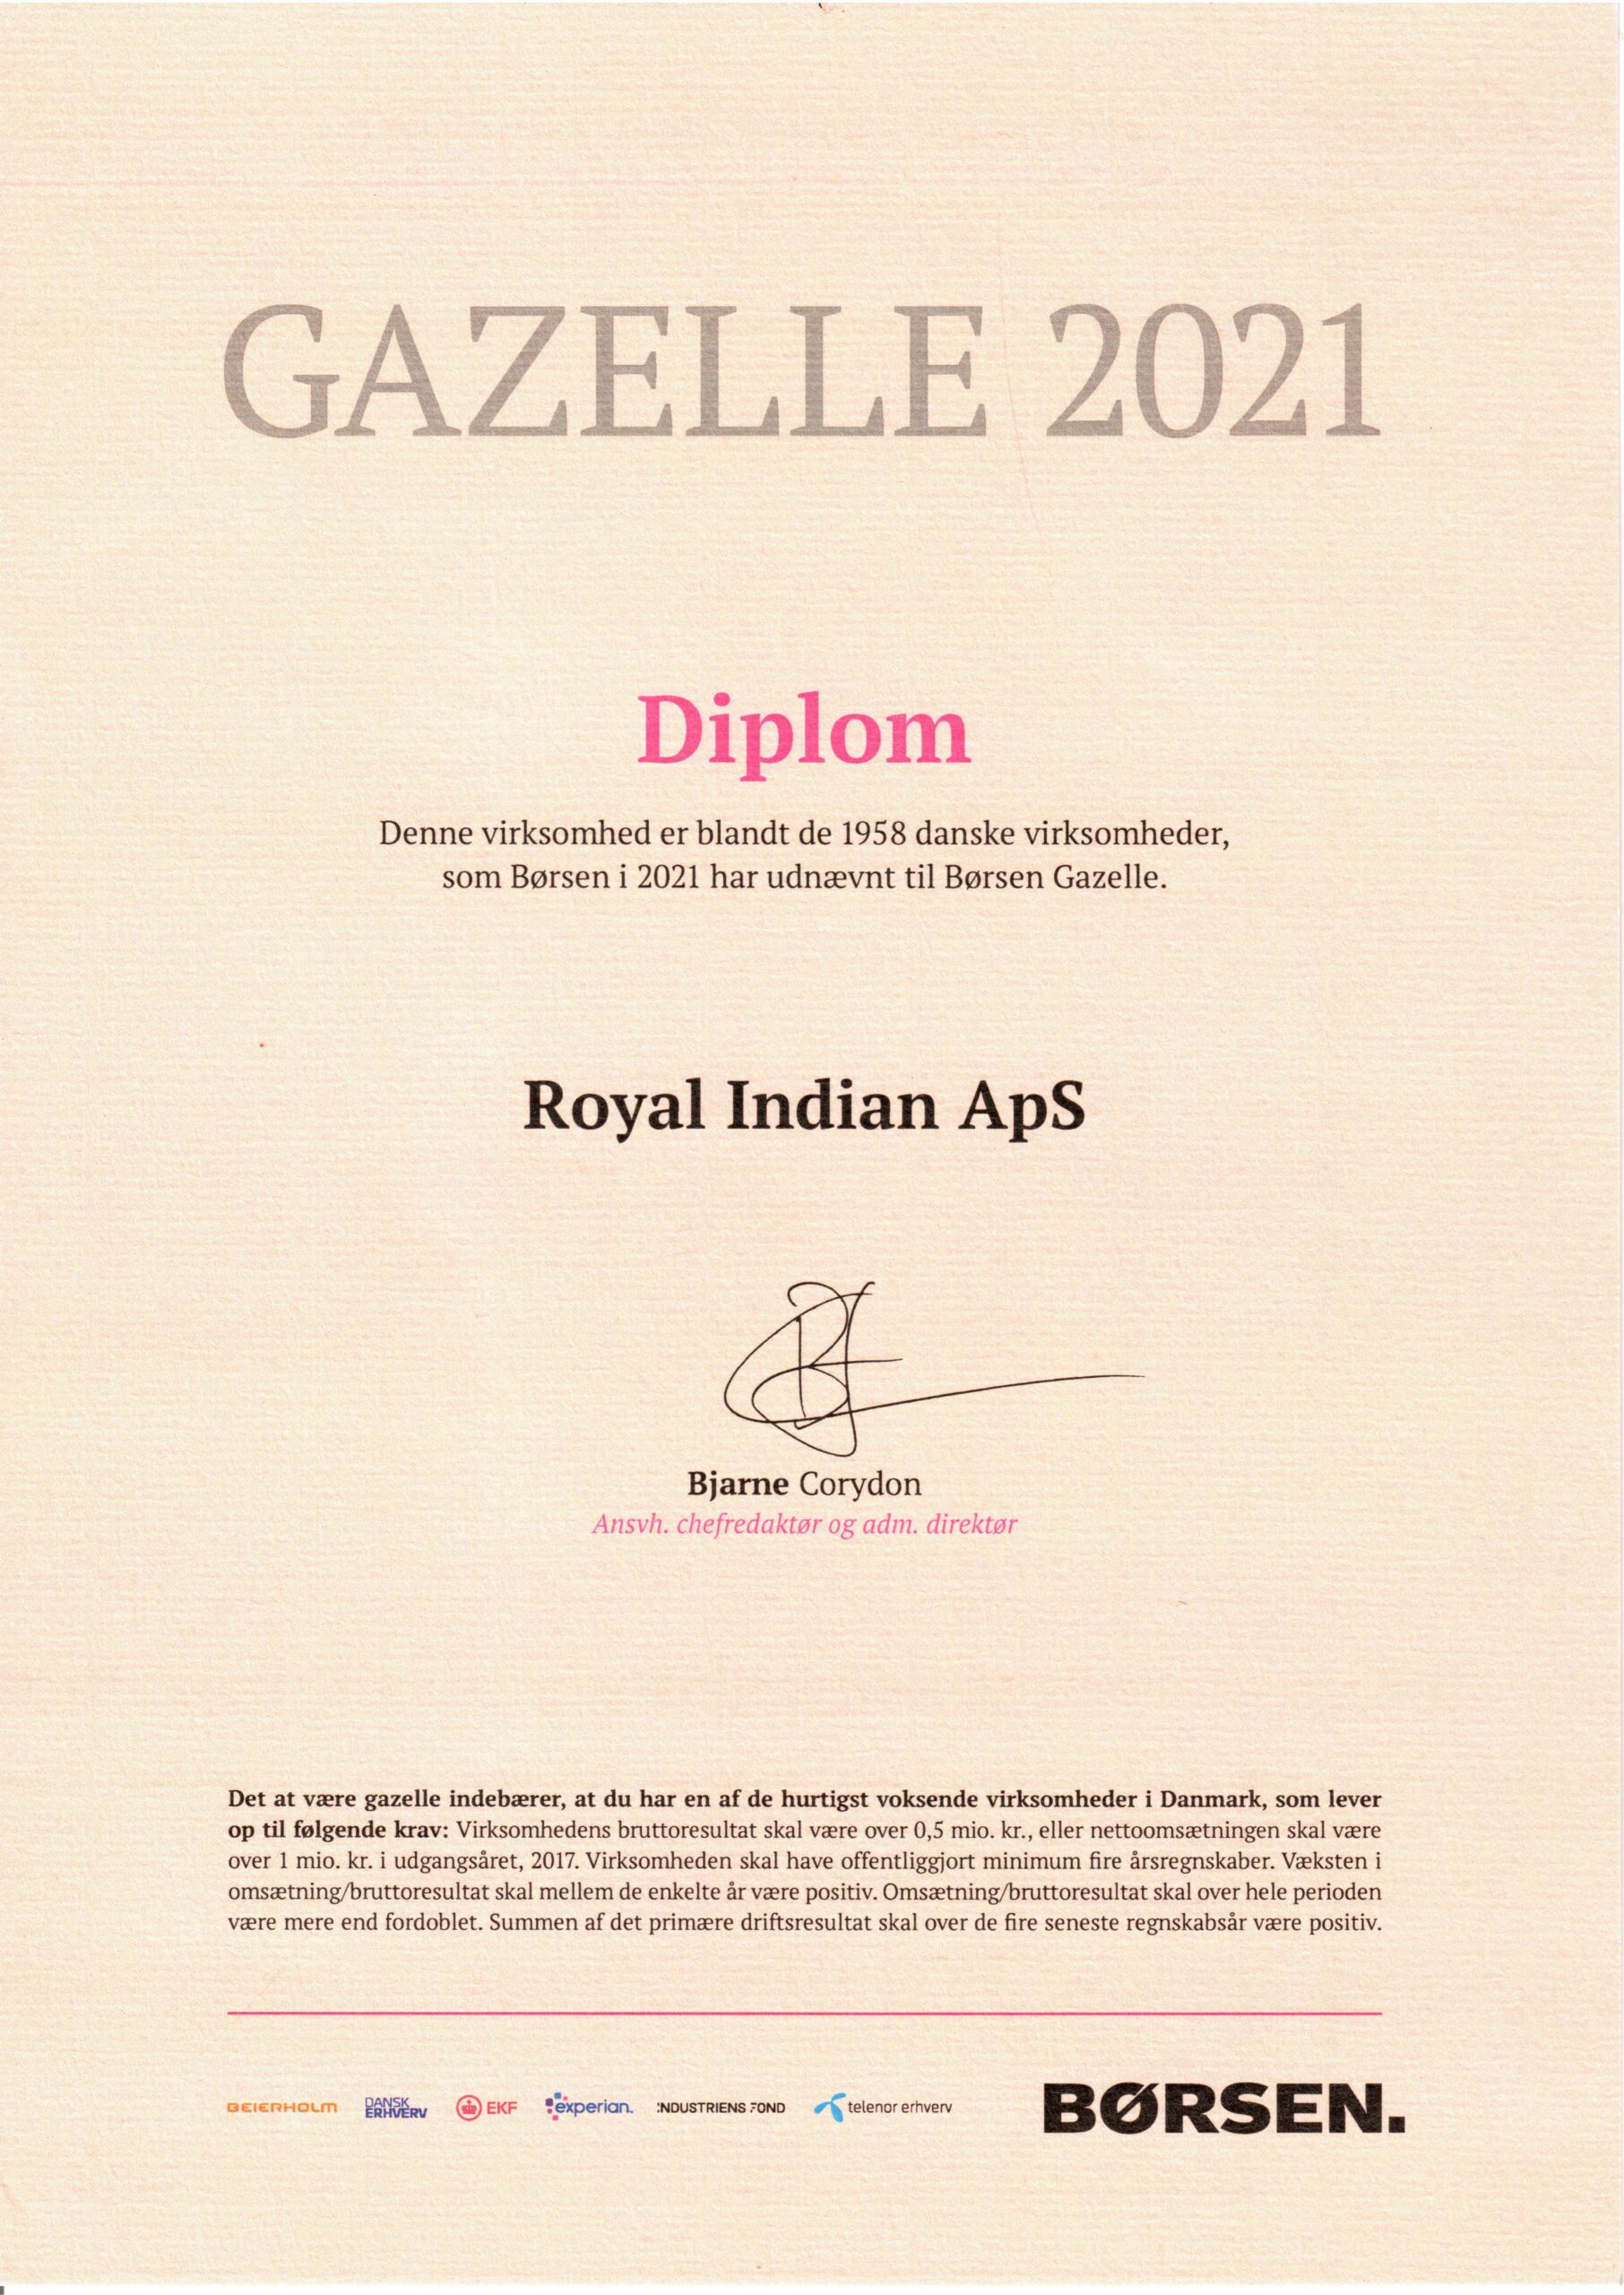 Royal Indian diplom gazelle 2021